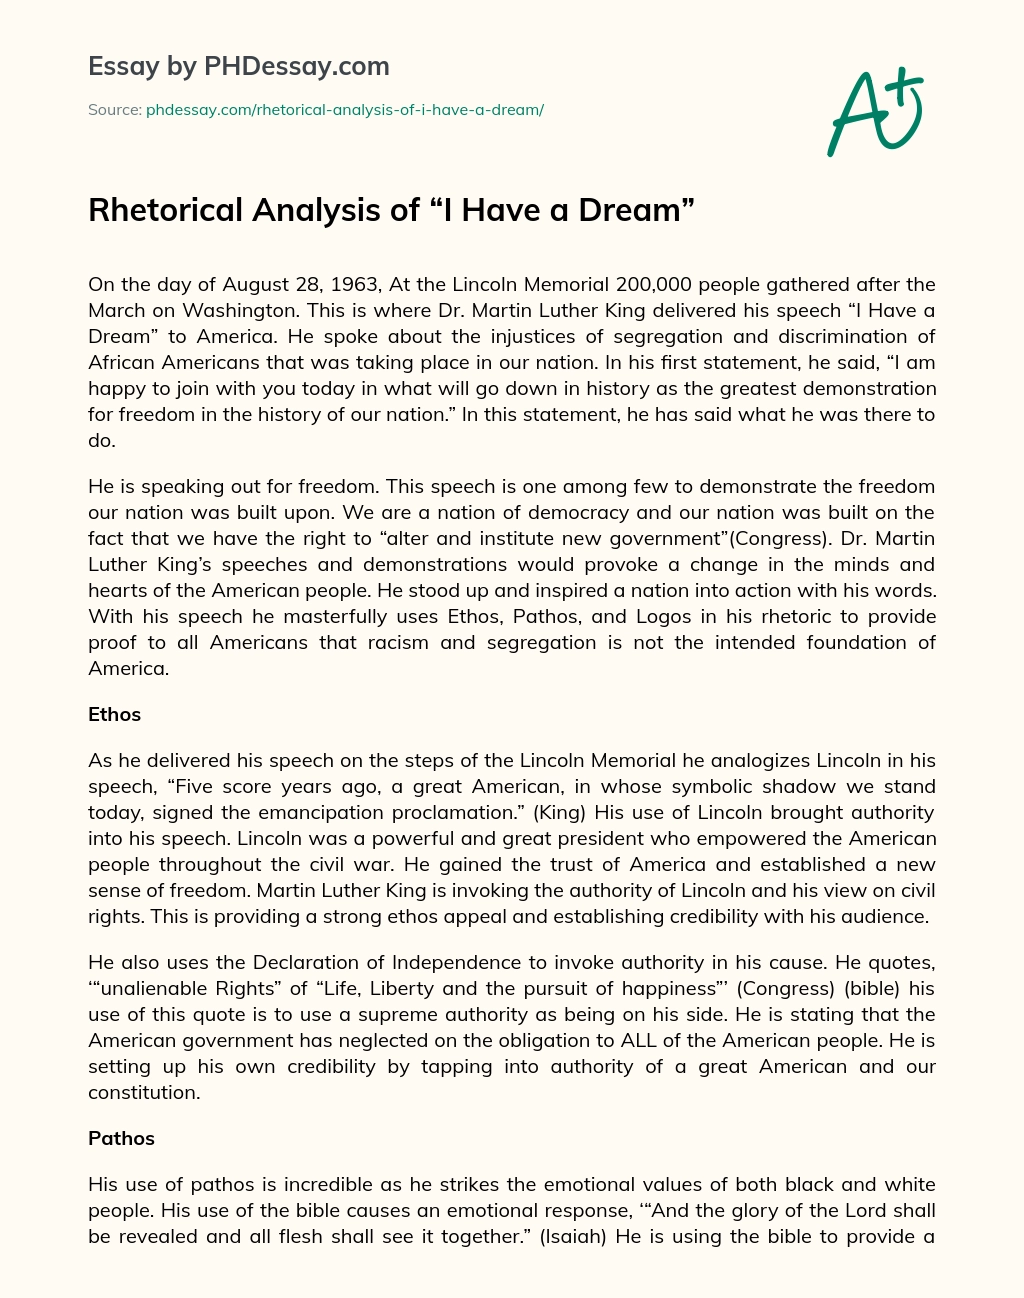 Rhetorical Analysis of “I Have a Dream” essay